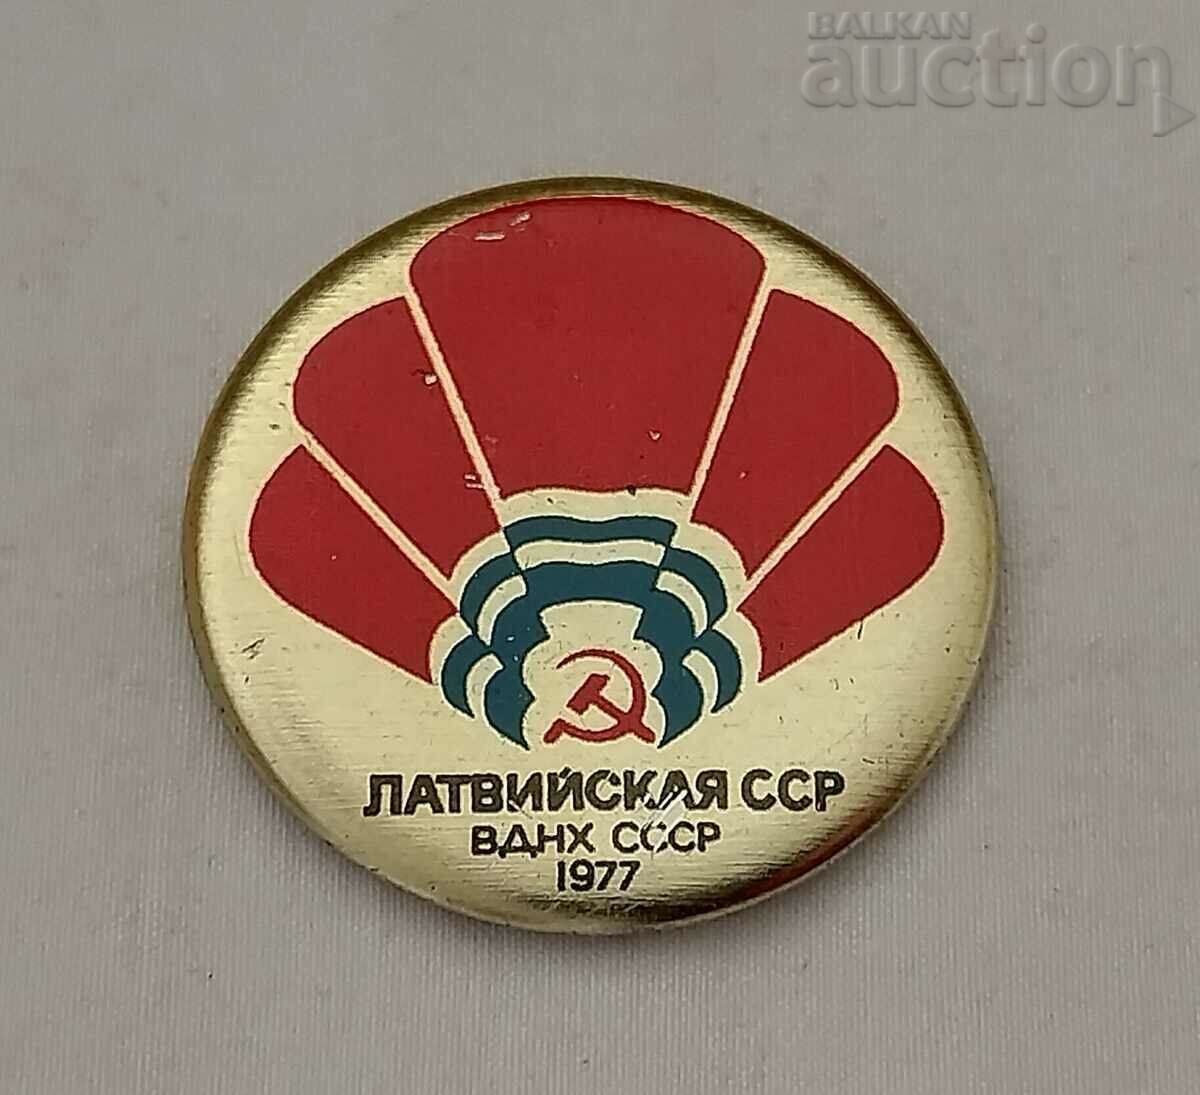 VDNH EXHIBITION LATVIA 1977 USSR BADGE